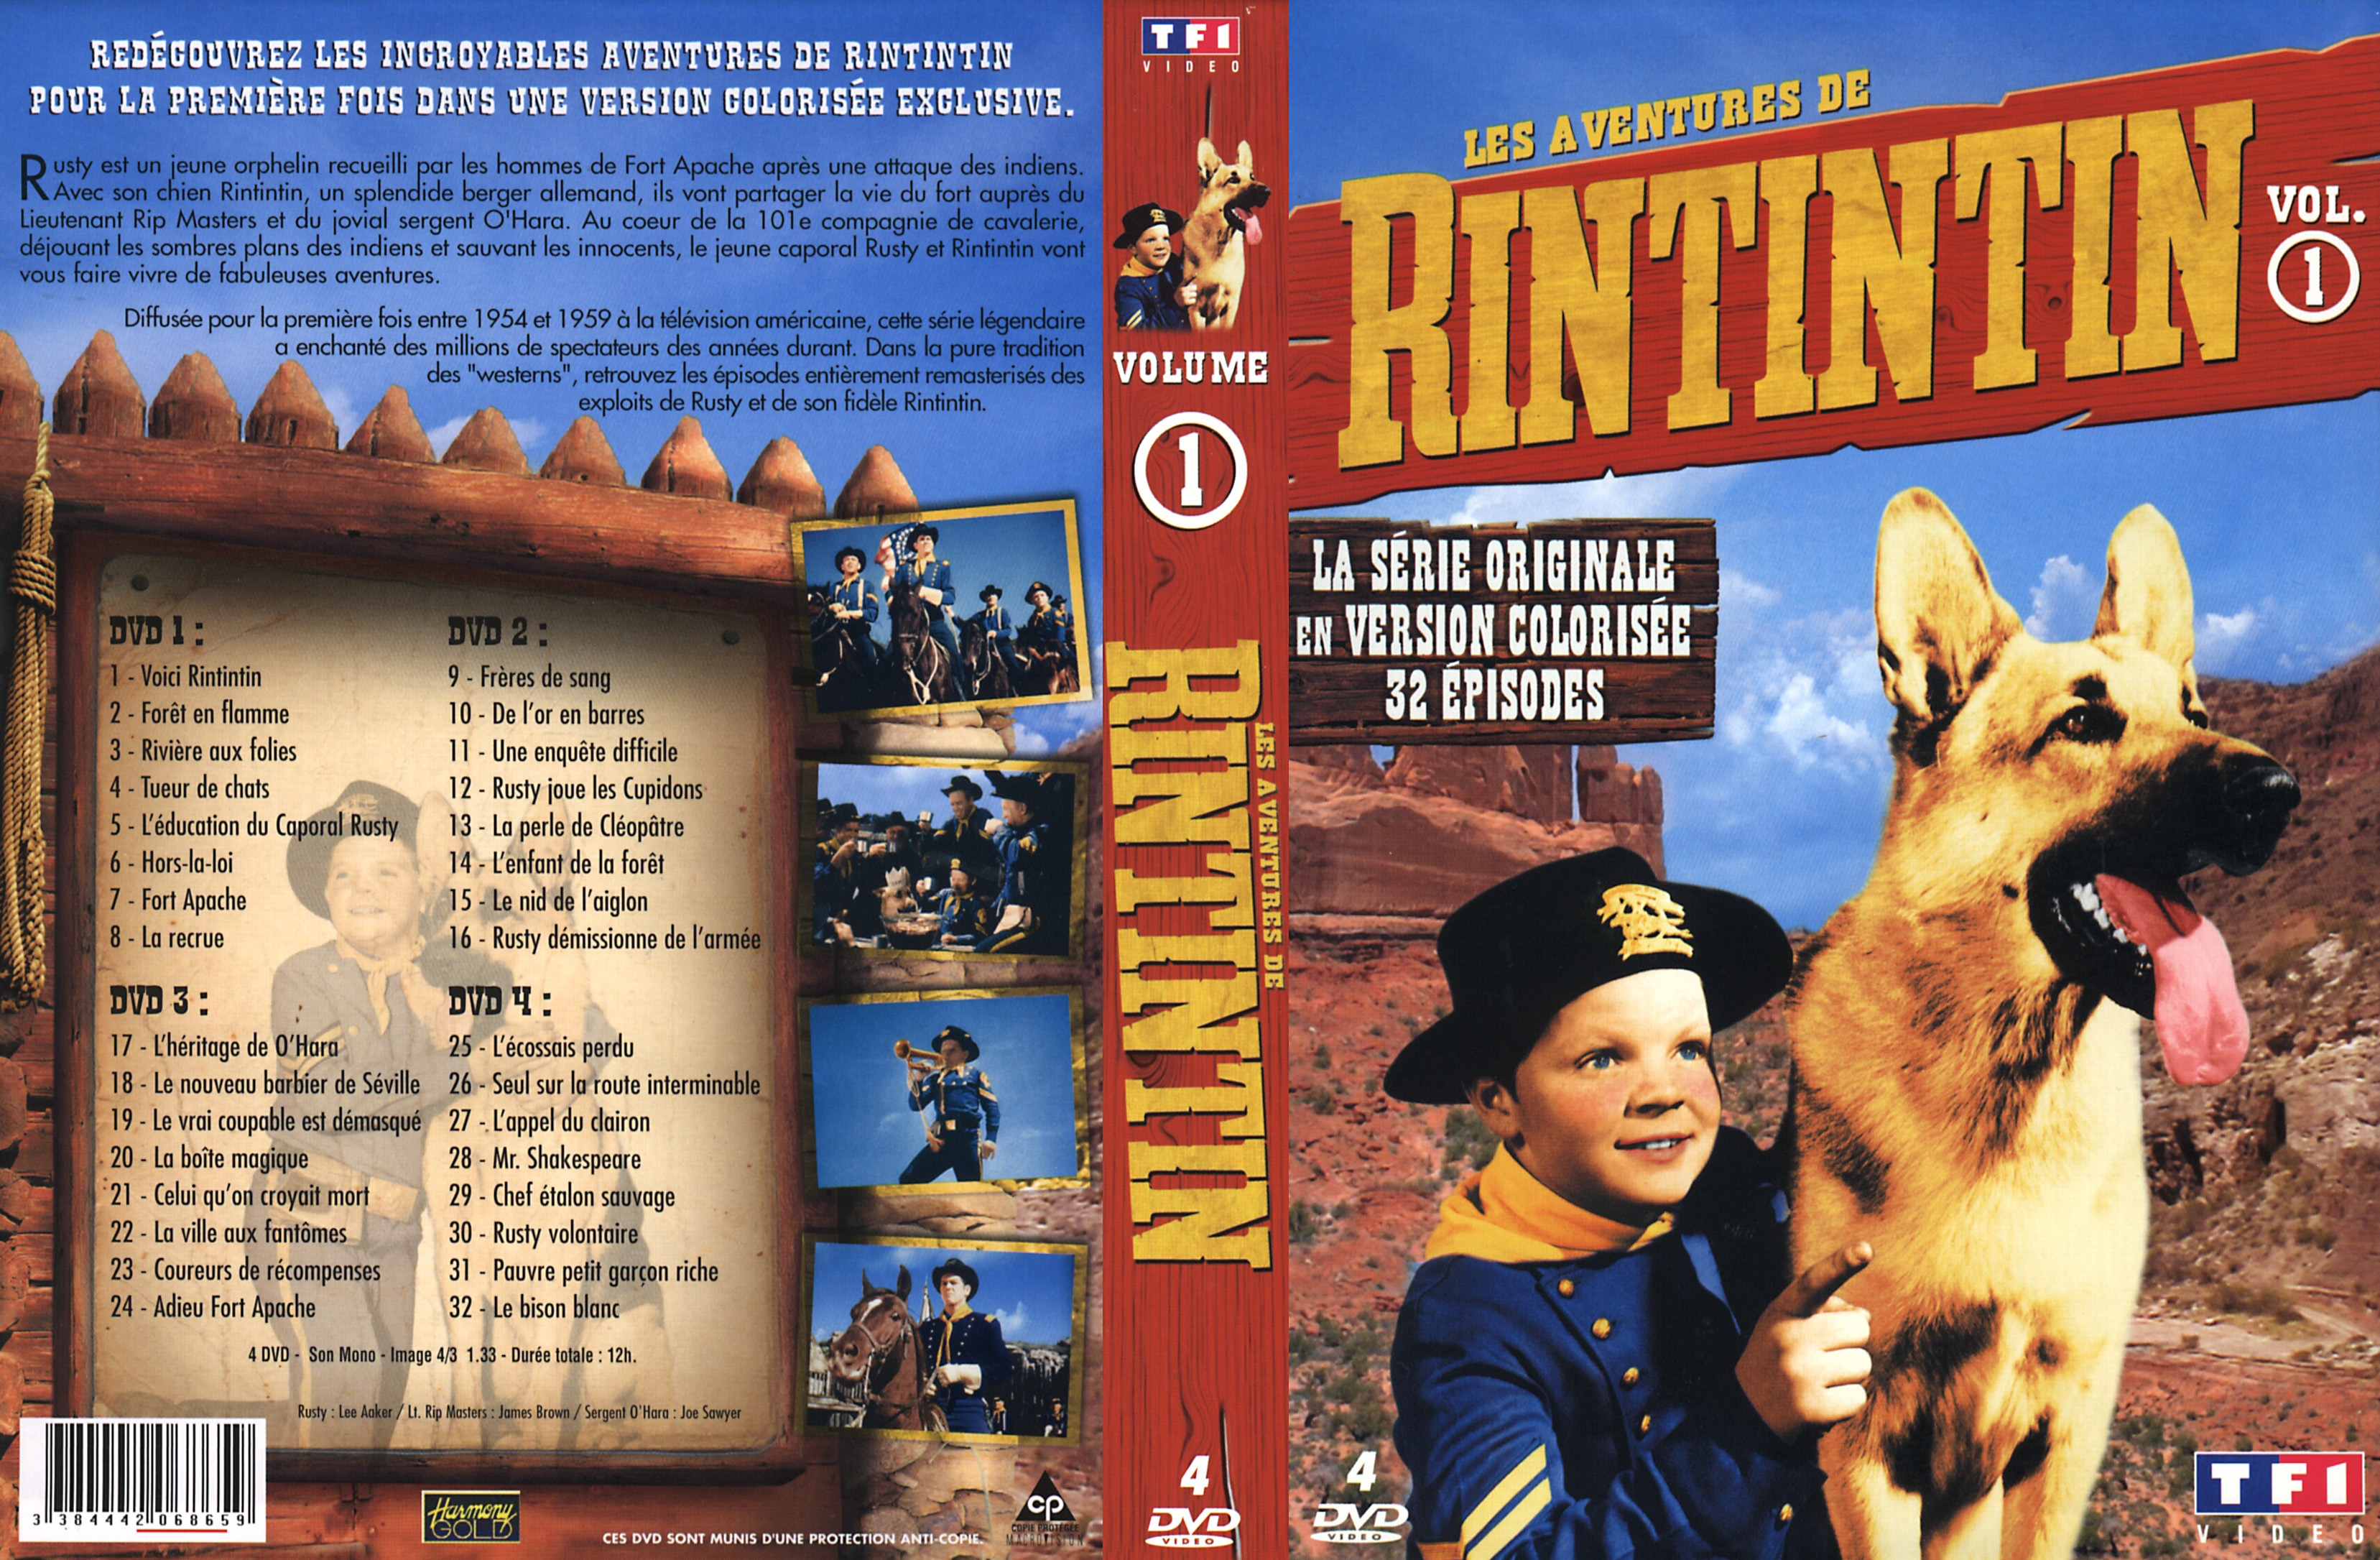 Jaquette DVD Les aventures de Rintintin vol 1 COFFRET